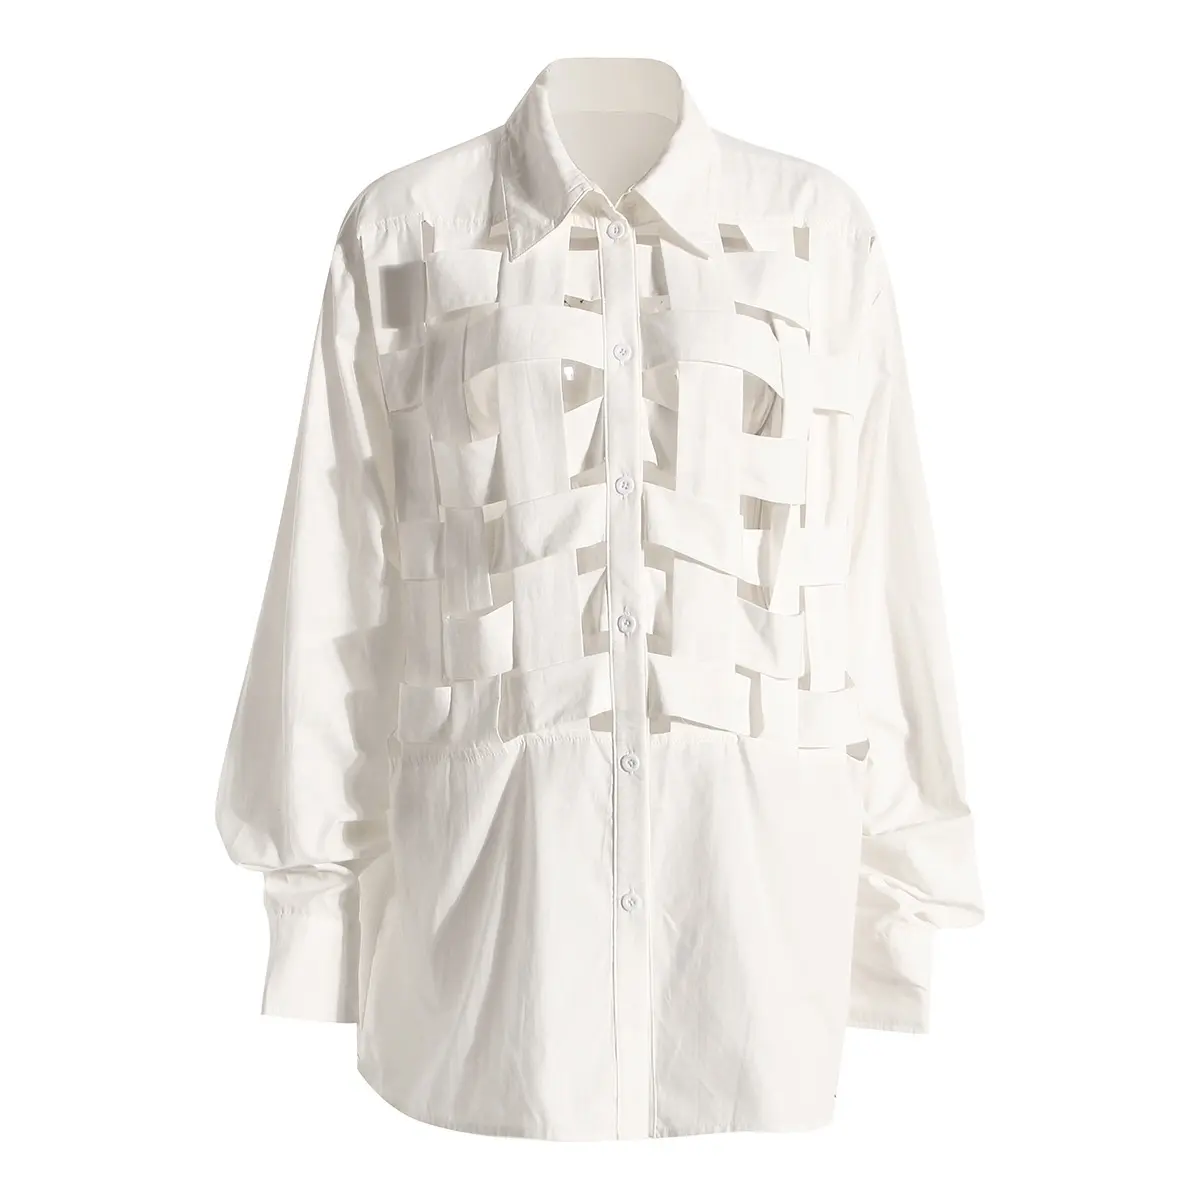 OUDINA New Trendy Fashionable Polo Shirts Hollow Cotton Blouse Long Sleeve Loose Tops White Shirt Women